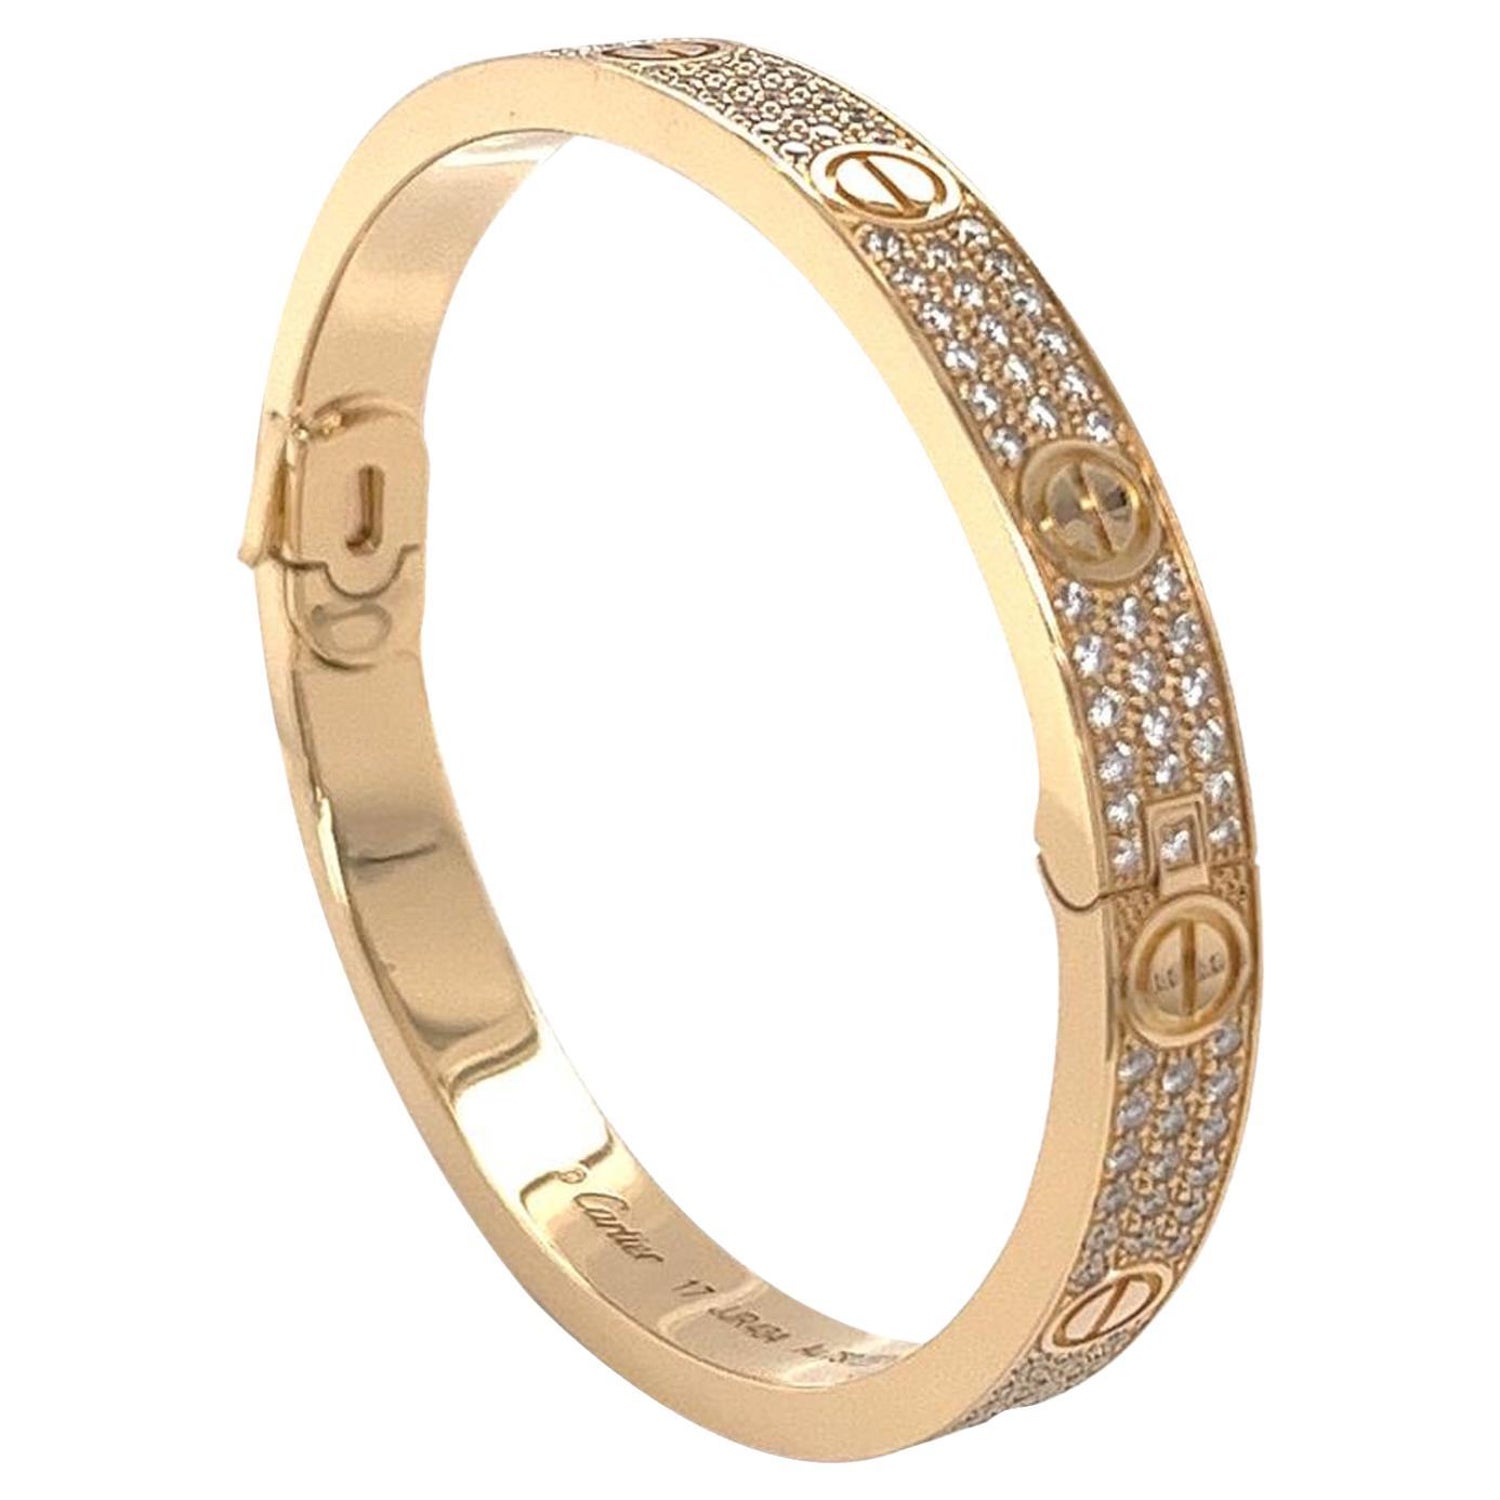 Cartier Love Bracelet 2 Carats 4 Brilliant Cut Pave Diamonds 18k Yellow Gold For Sale At 1stdibs